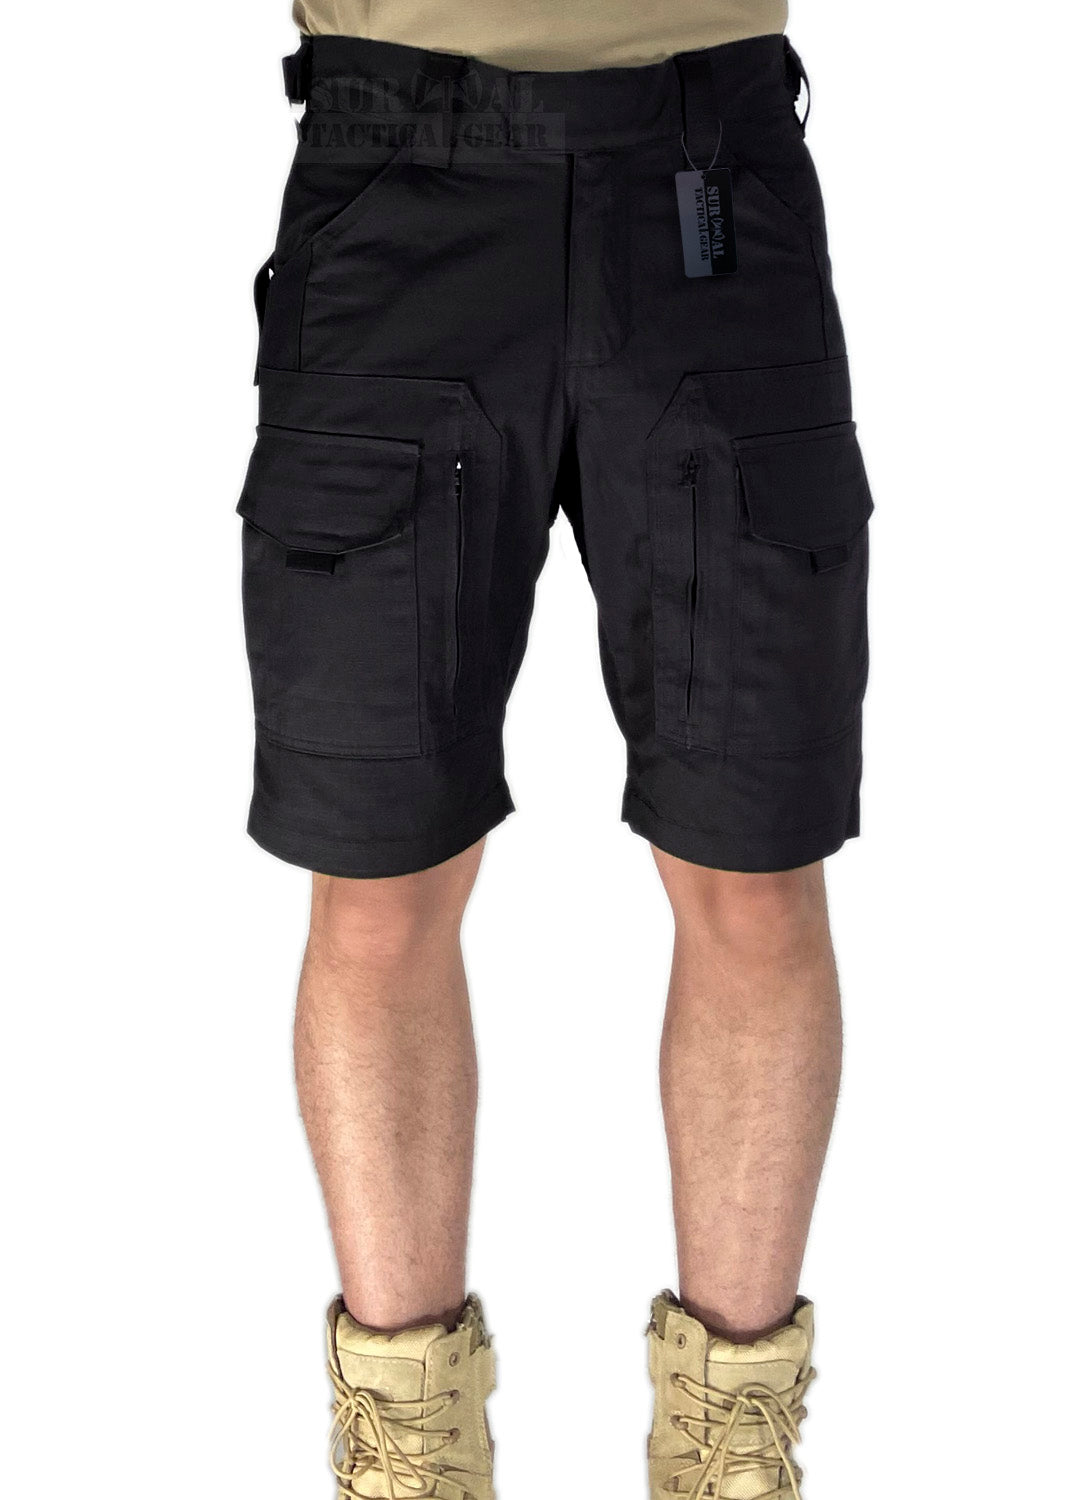 ZAPT Tactical Shorts Molle